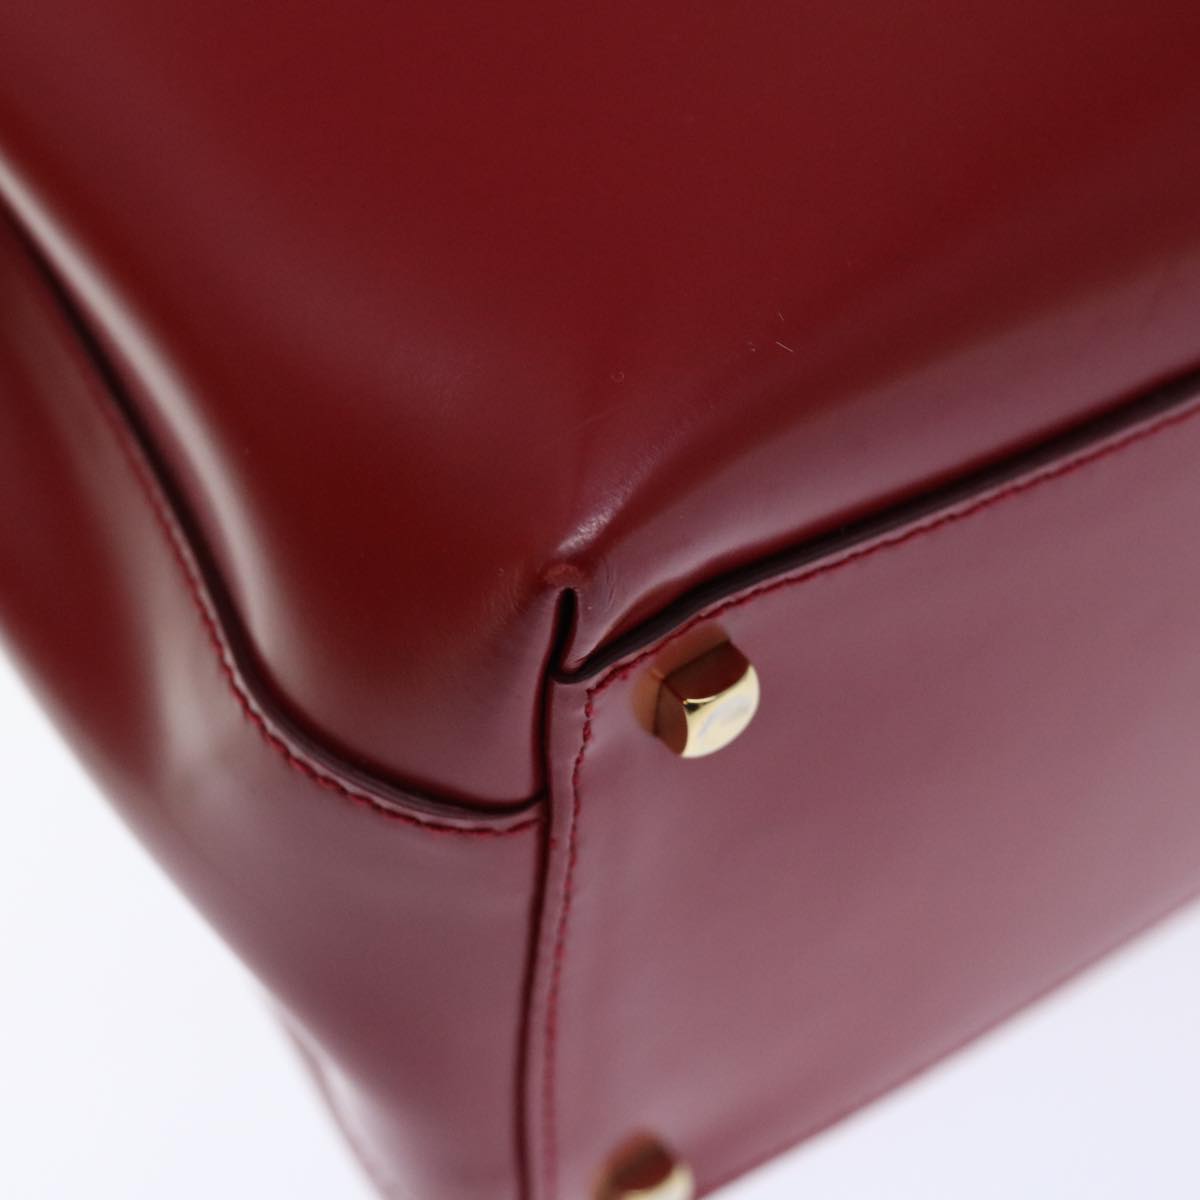 Salvatore Ferragamo Gancini Hand Bag Leather 2way Red Auth th4761